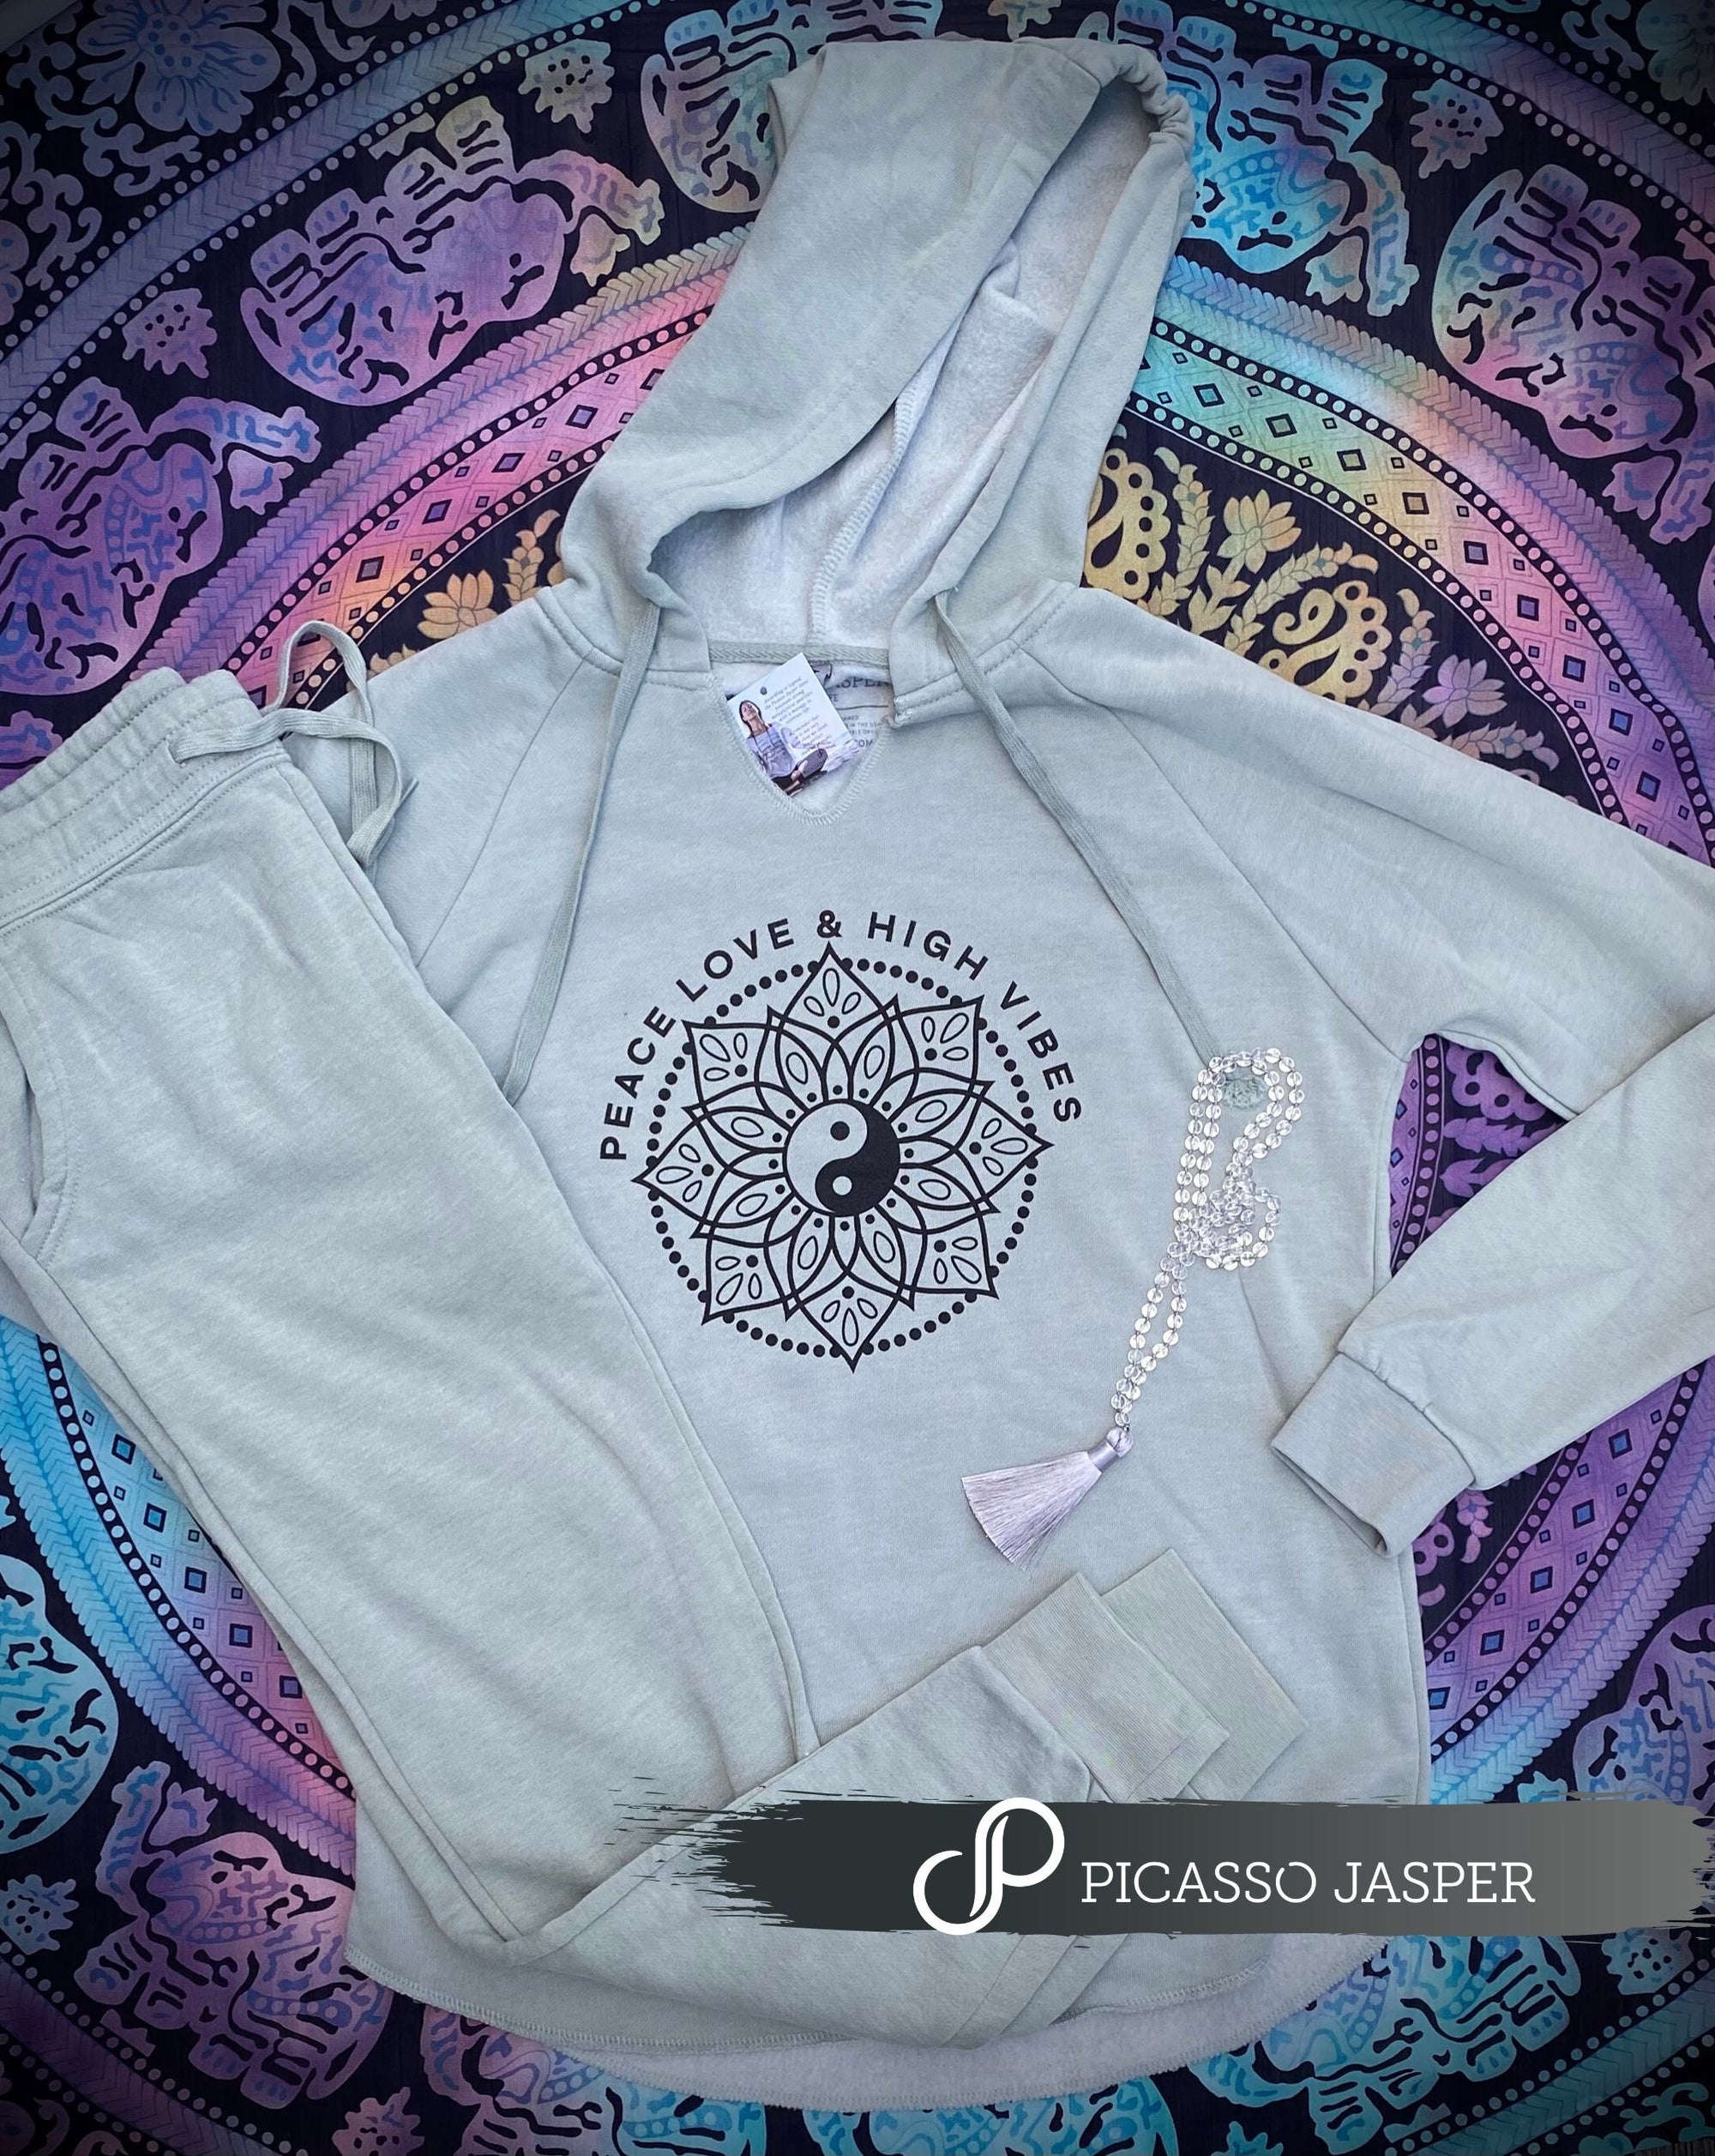 Peace Love & High Vibes Yin Yang Sweatshirt + Jogger +  Crystal, Sweatshirt Bundle!